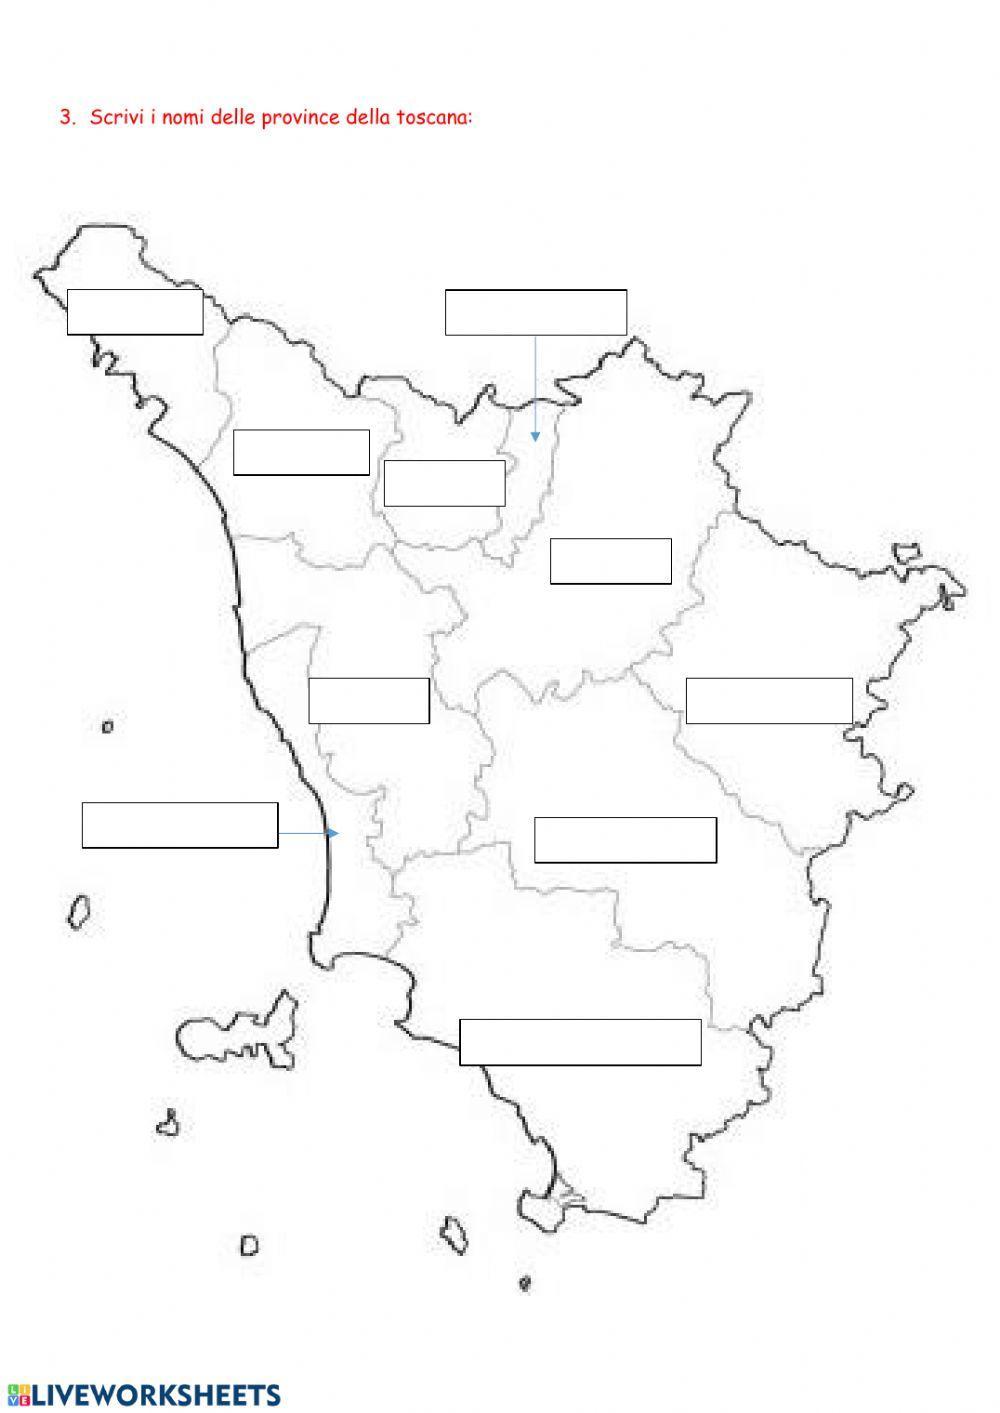 La regione Toscana